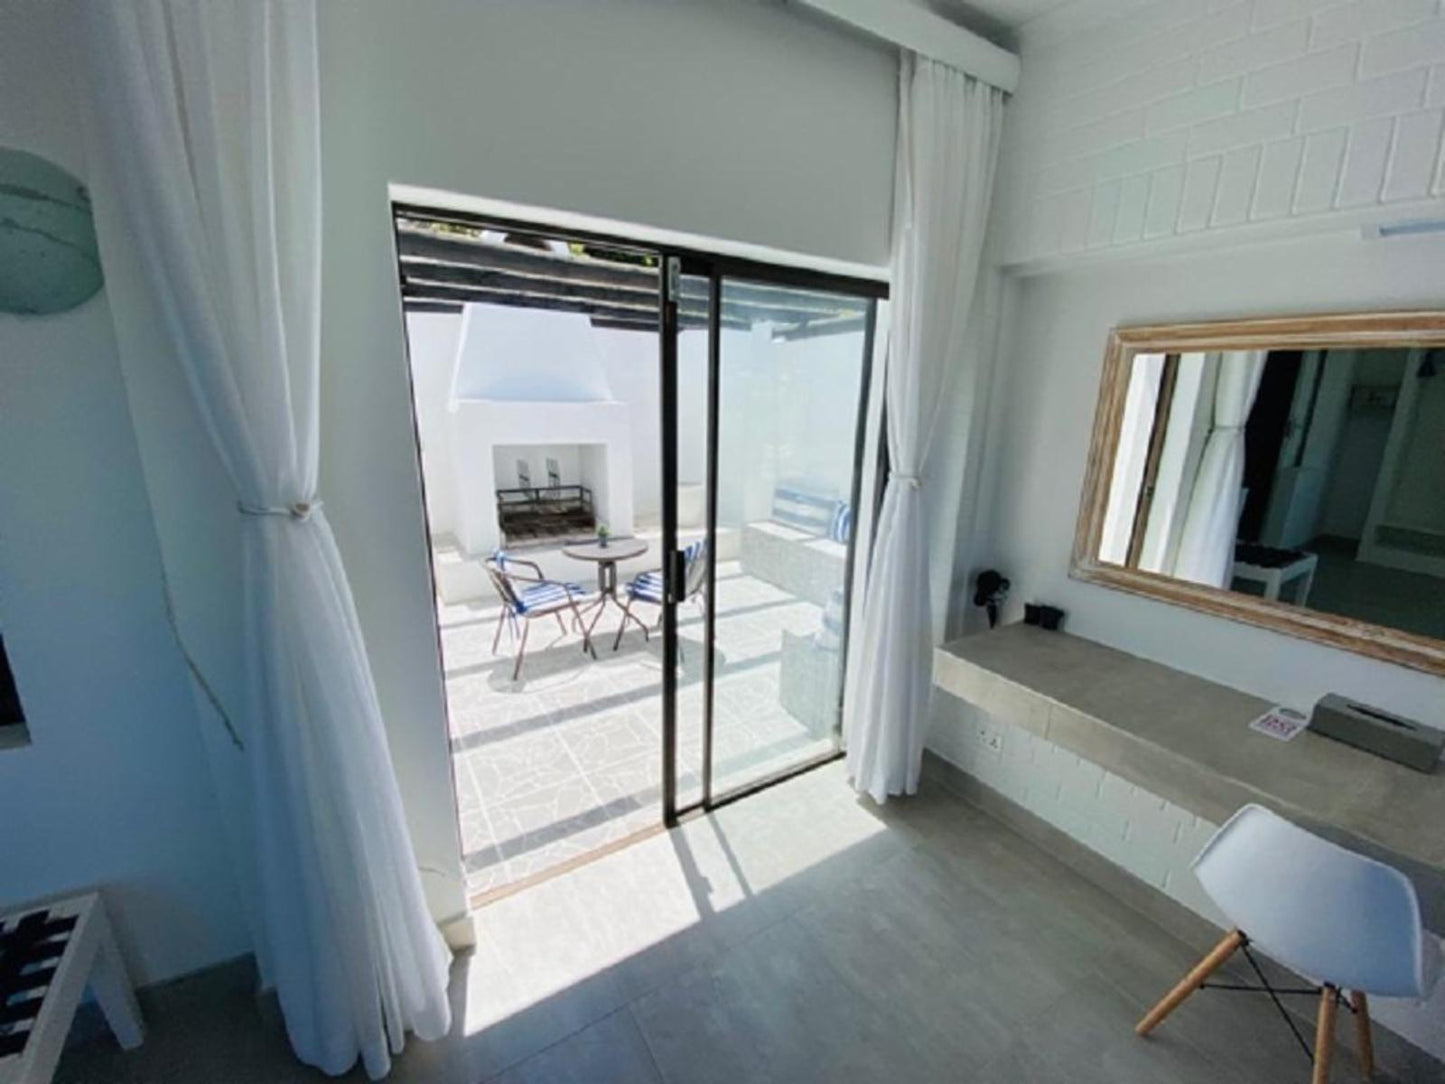 Deluxe sea-facing room @ My-Konos Luxury Beach Accommodation